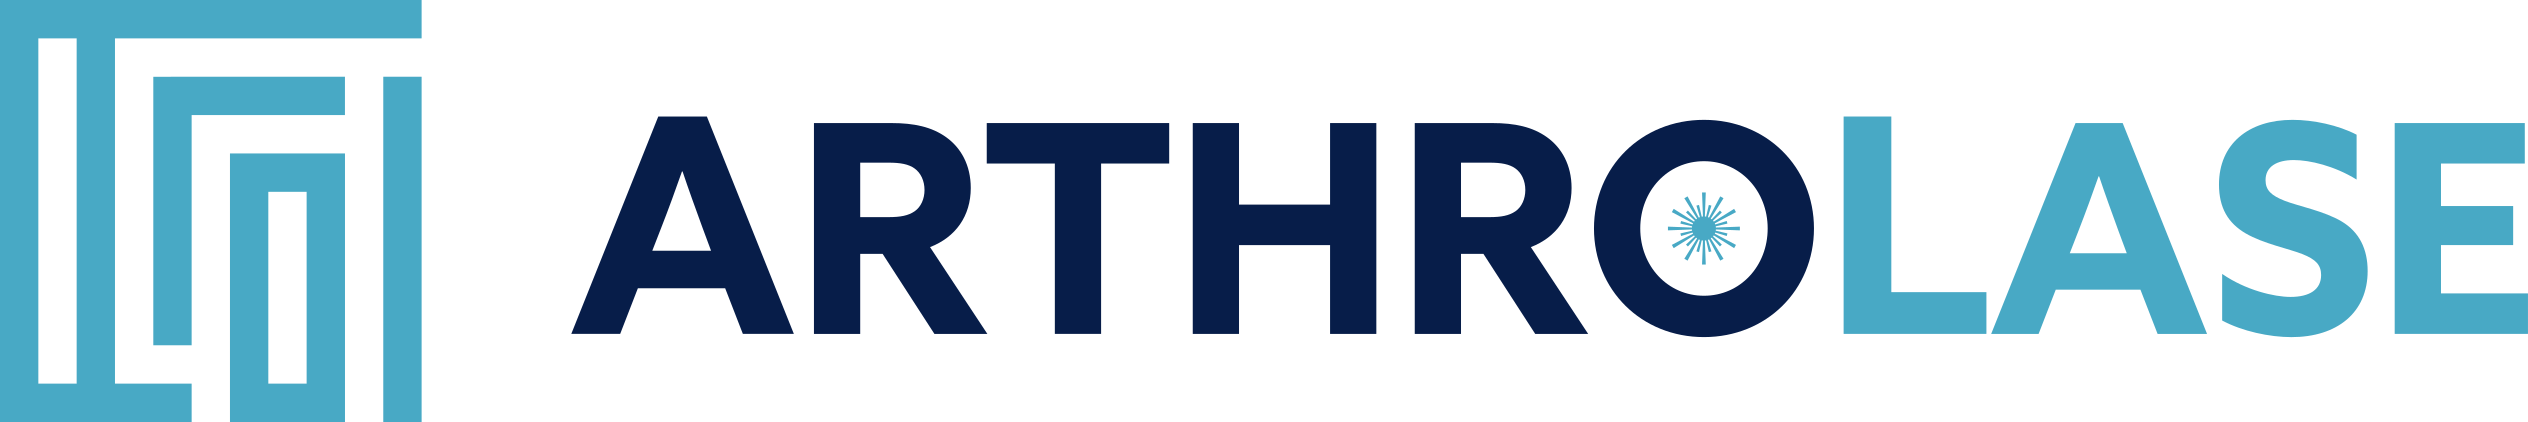 ArthroLase logo